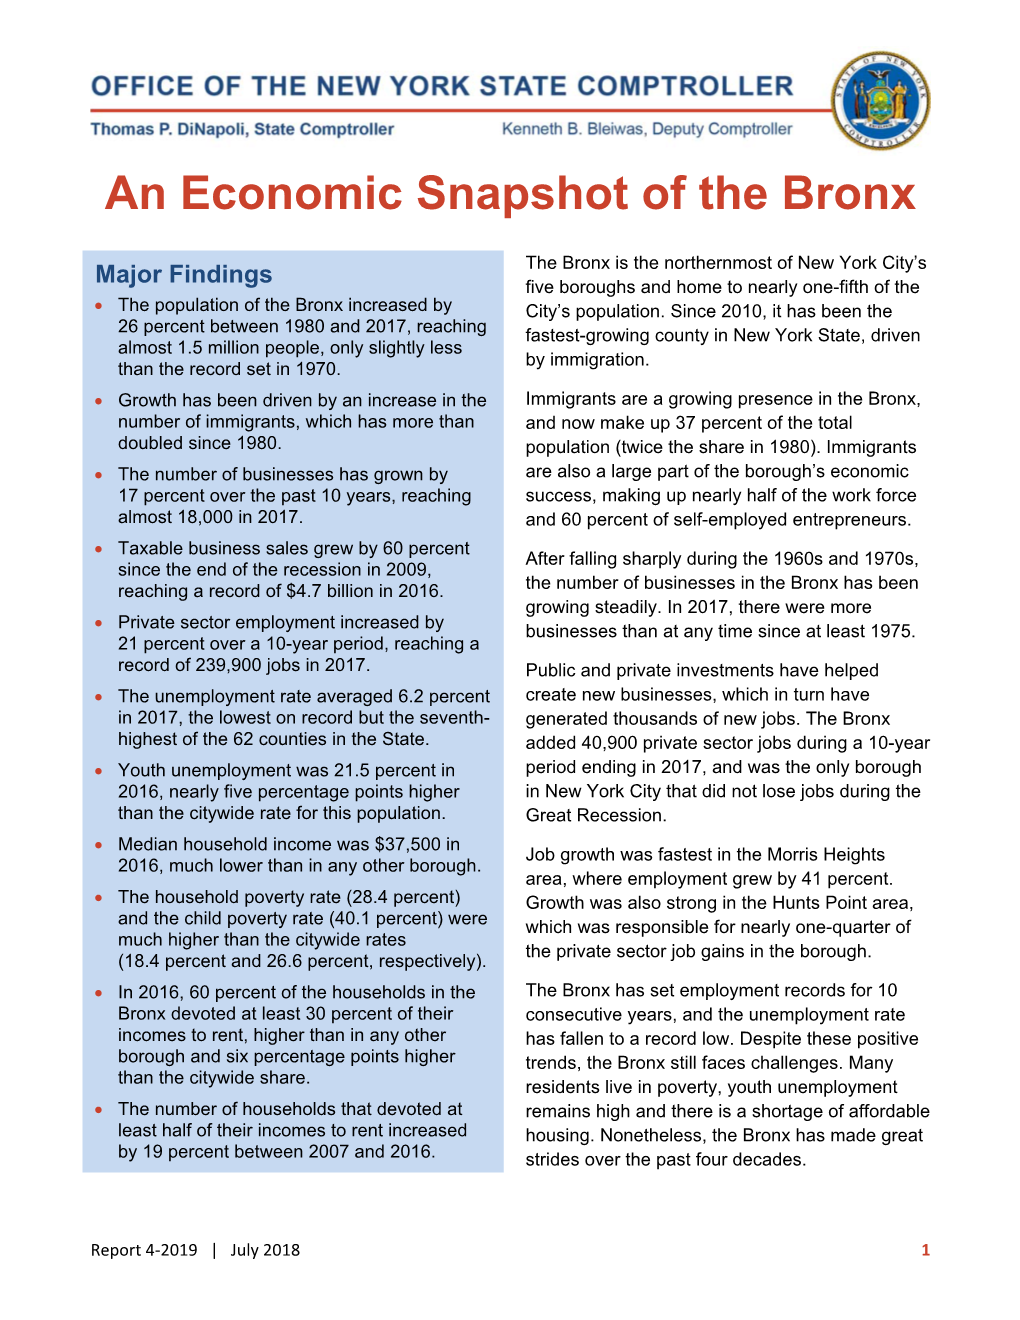 An Economic Snapshot of the Bronx